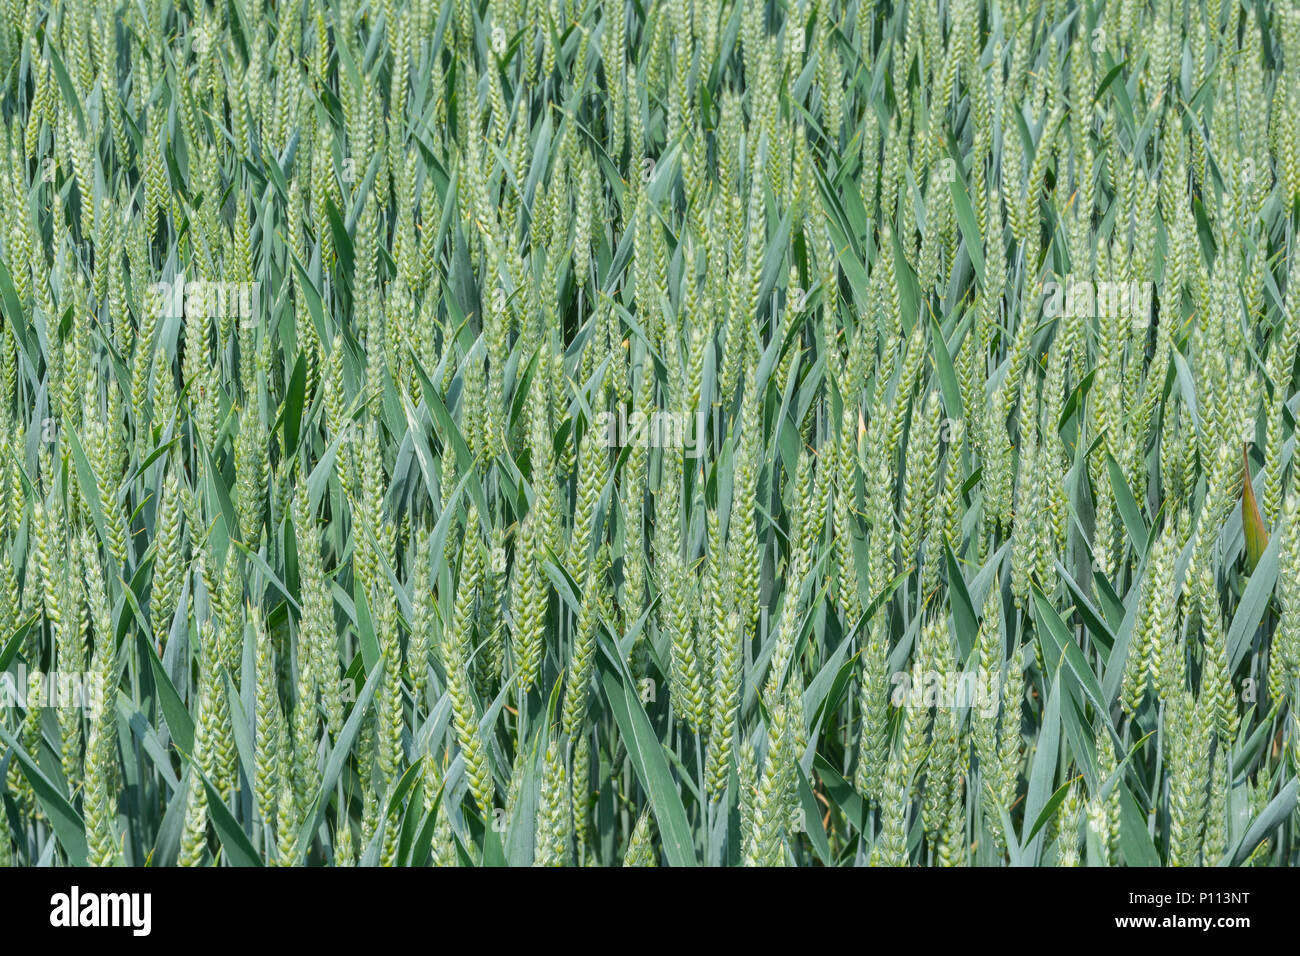 Variety of Wheat / Triticum still in its unripe green state. 2020 UK wheat crop. Stock Photo